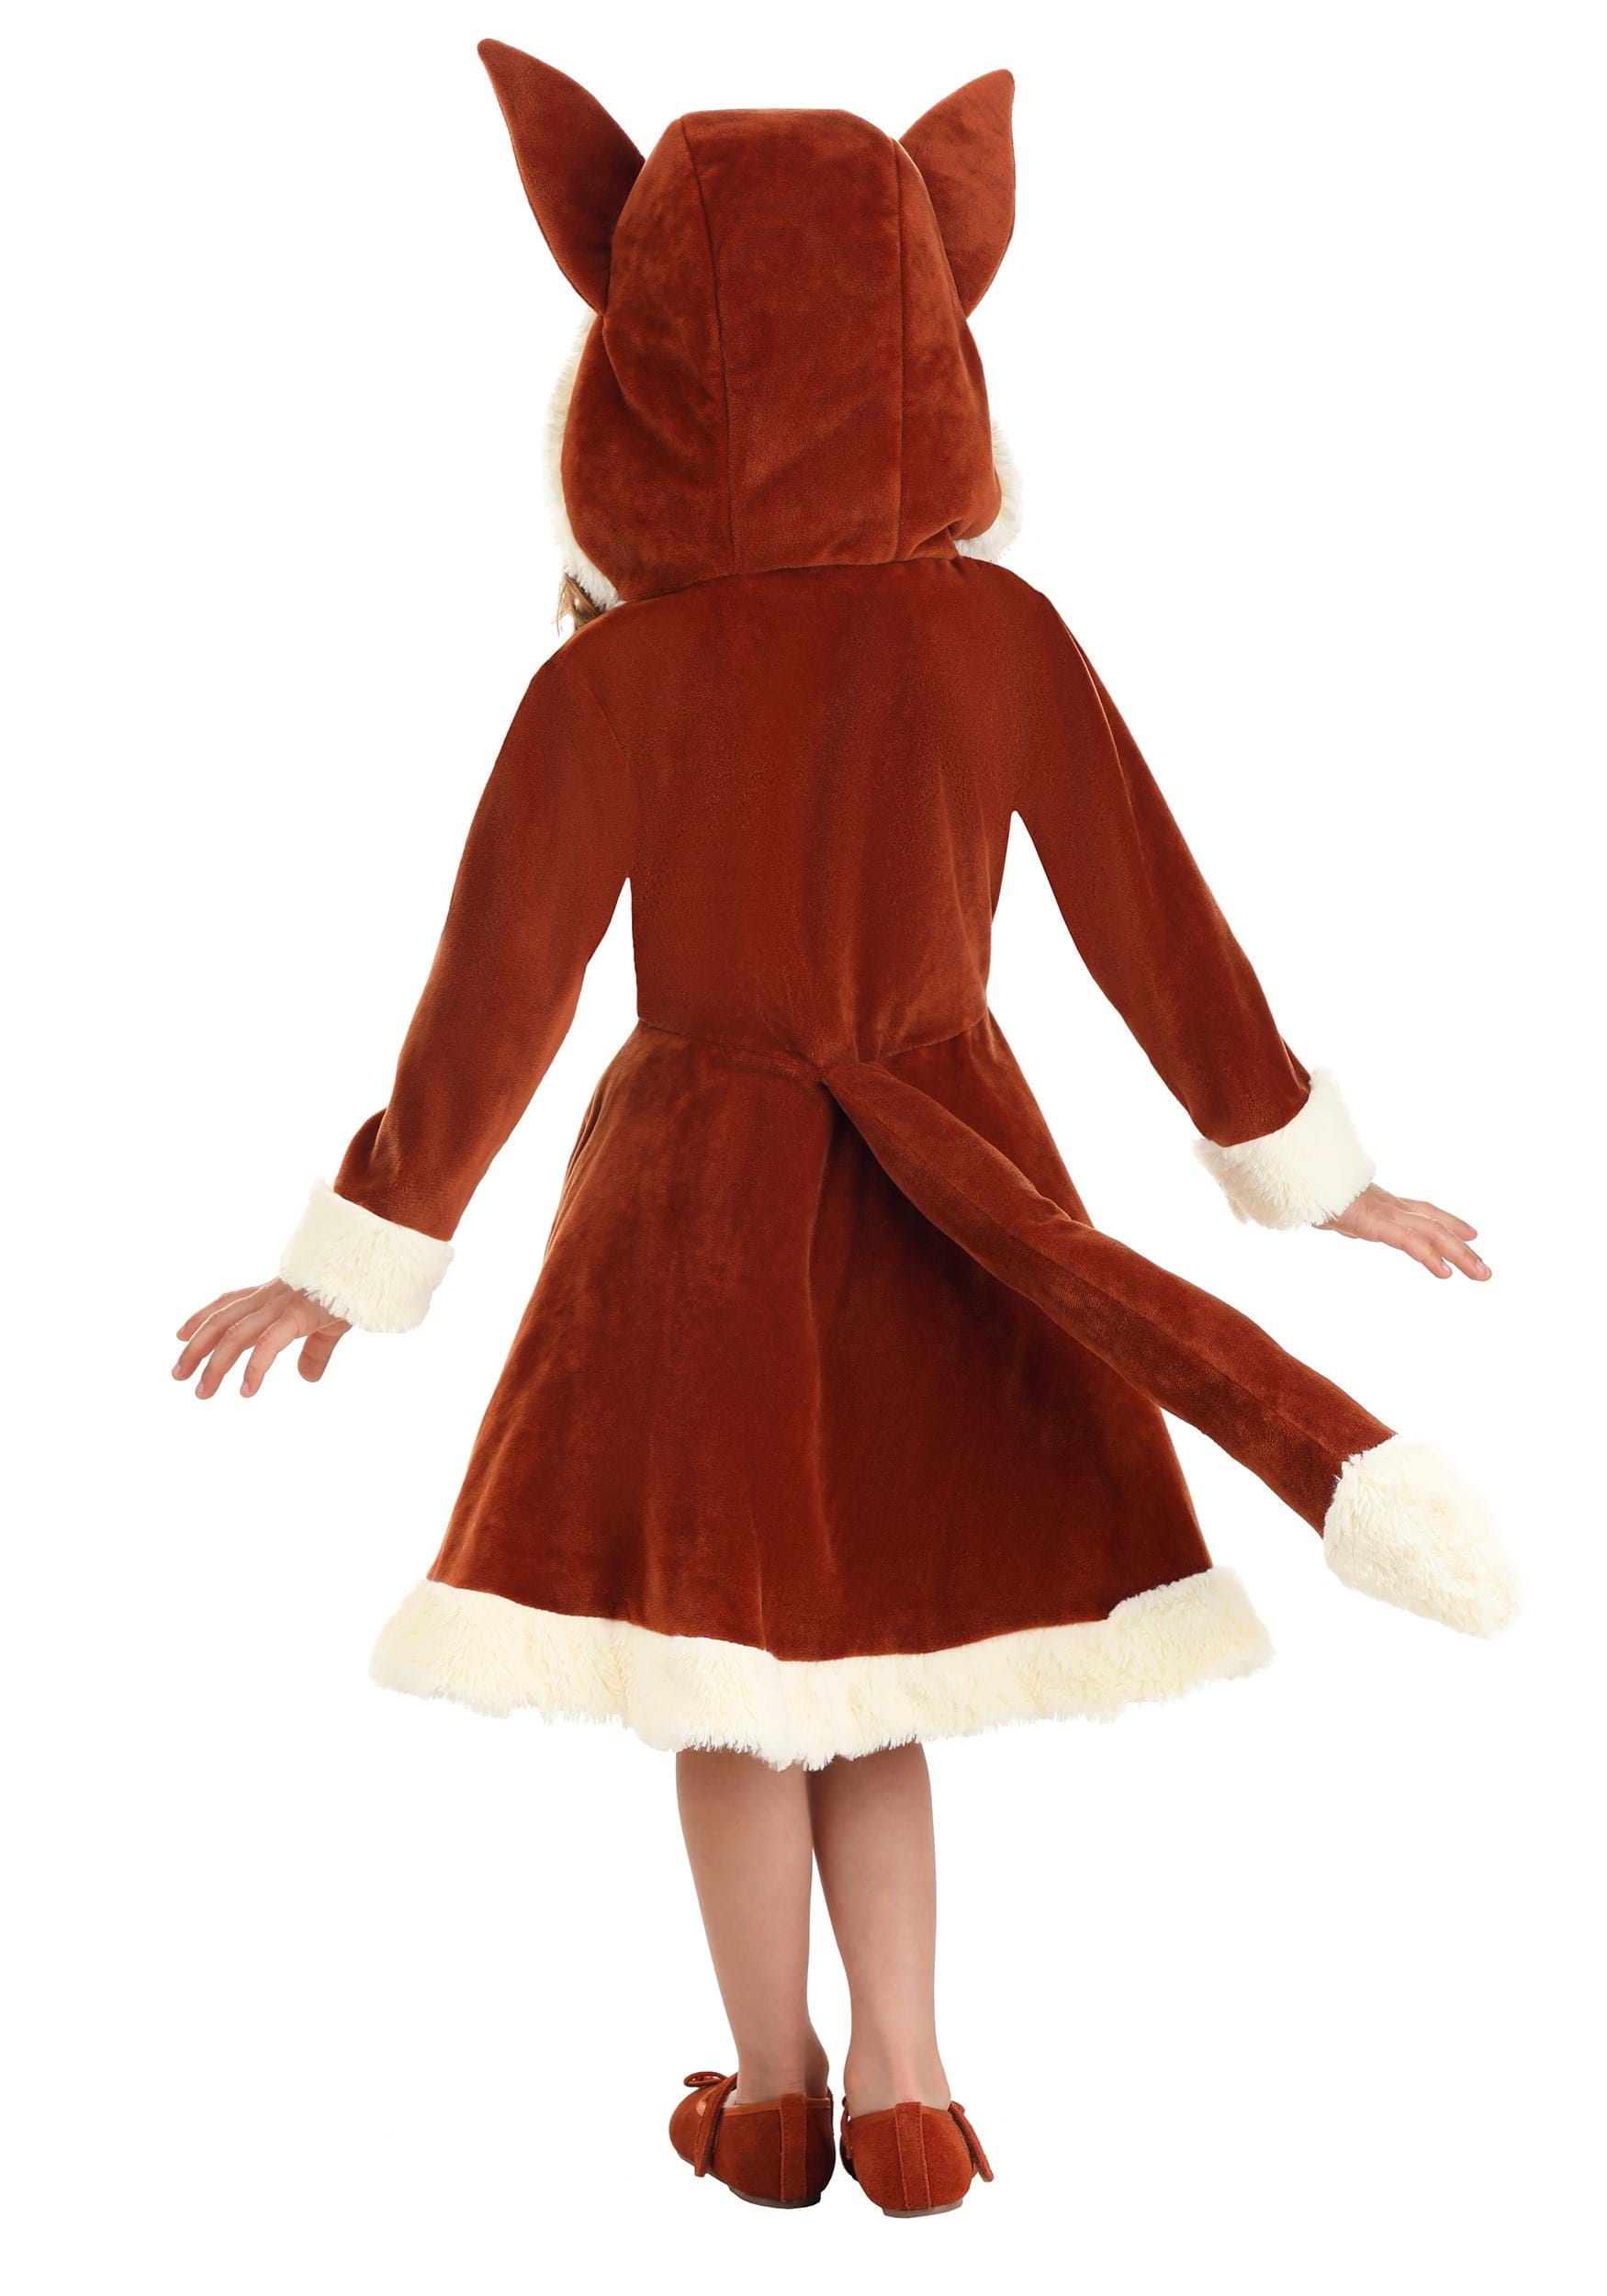 Fox Toddler Dress Costume